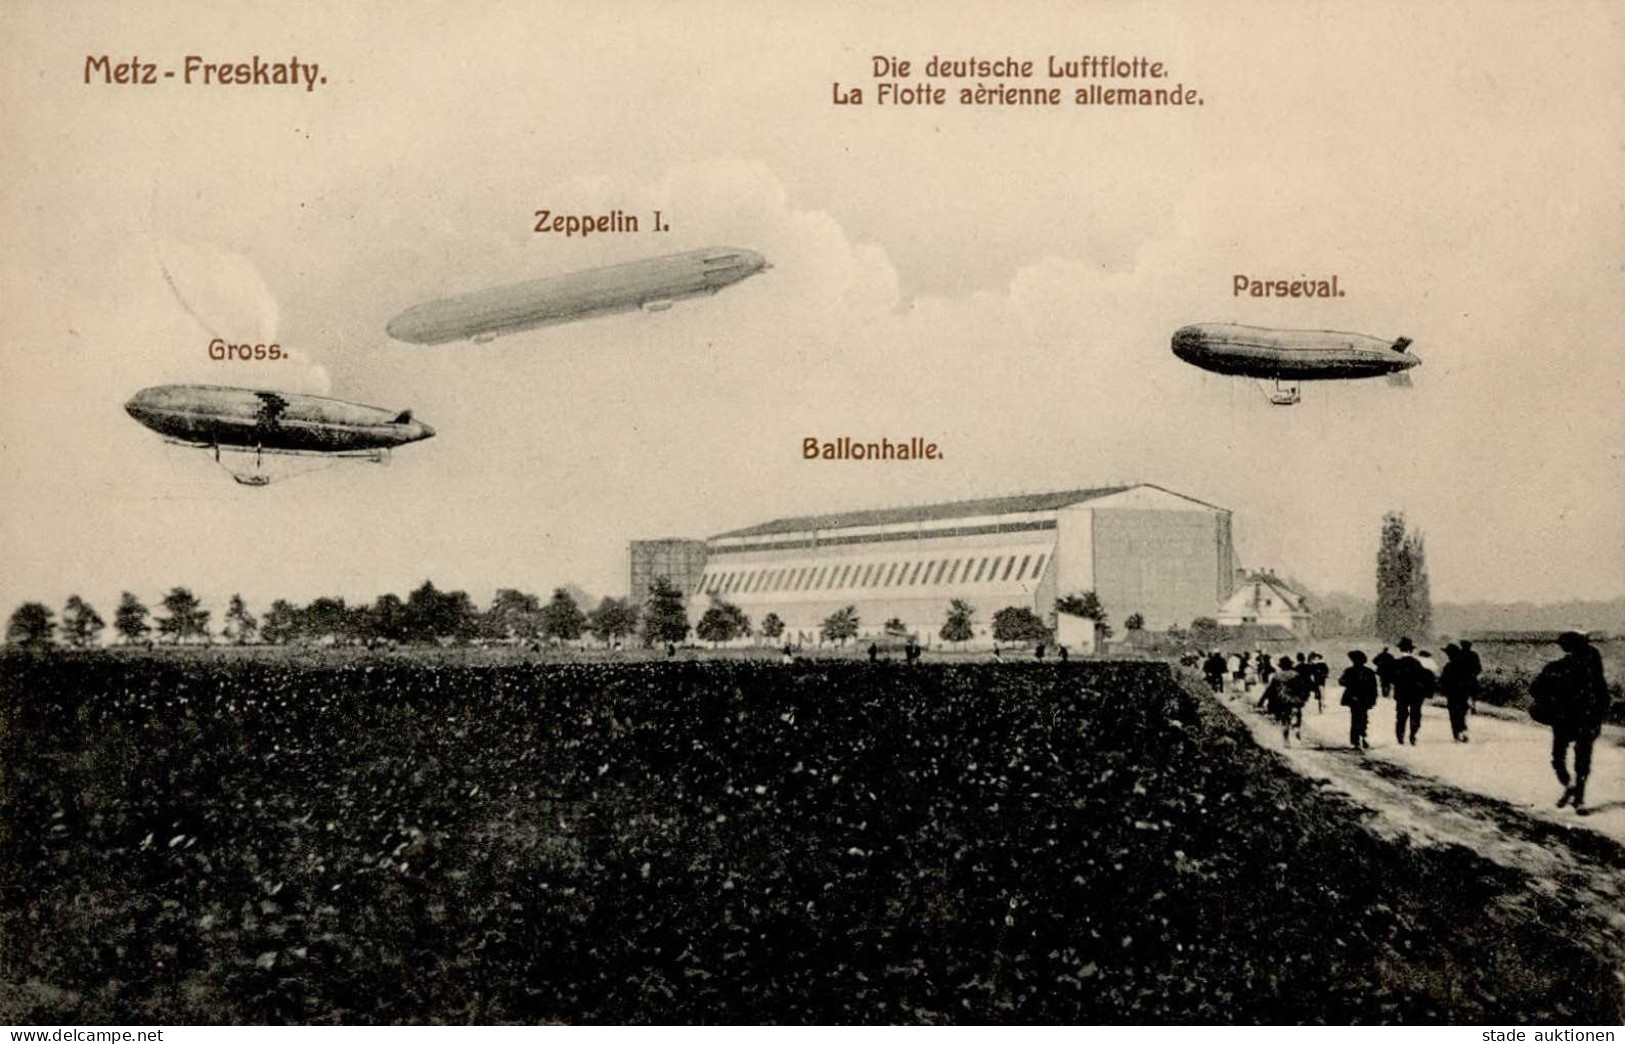 Zeppelin Metz-Freskaty Ballonhalle Mit Deutscher Luftflotte I-II Dirigeable - Aeronaves